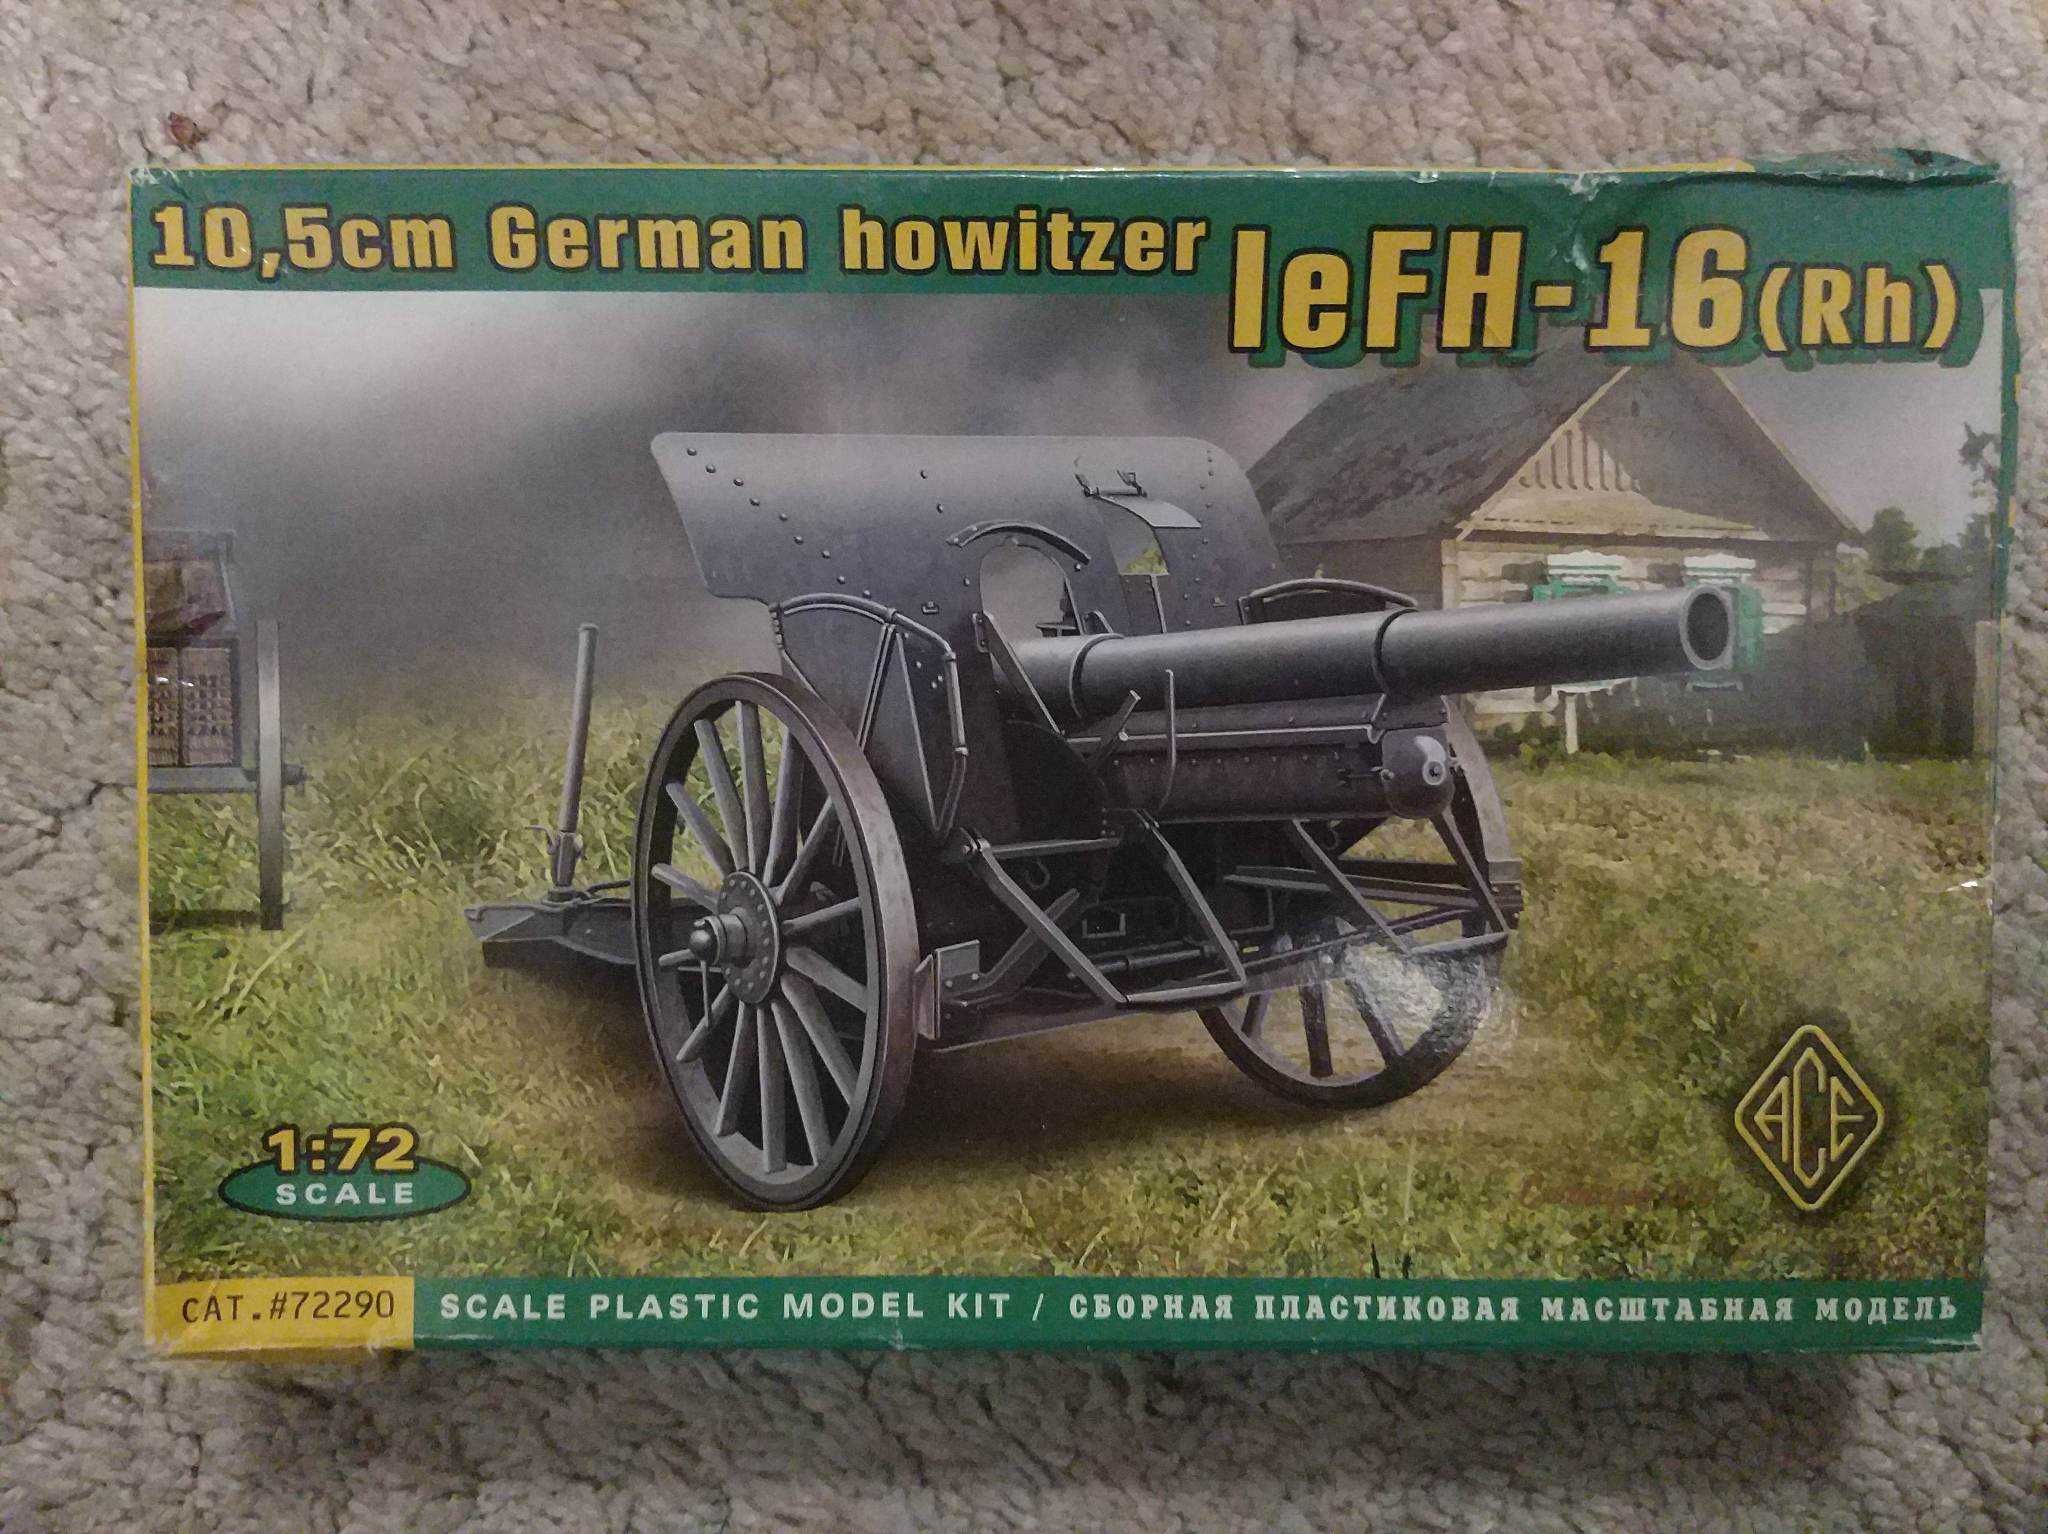 ACE 72290 German IWW howitzer 10,5cm leFH-16(Rh)